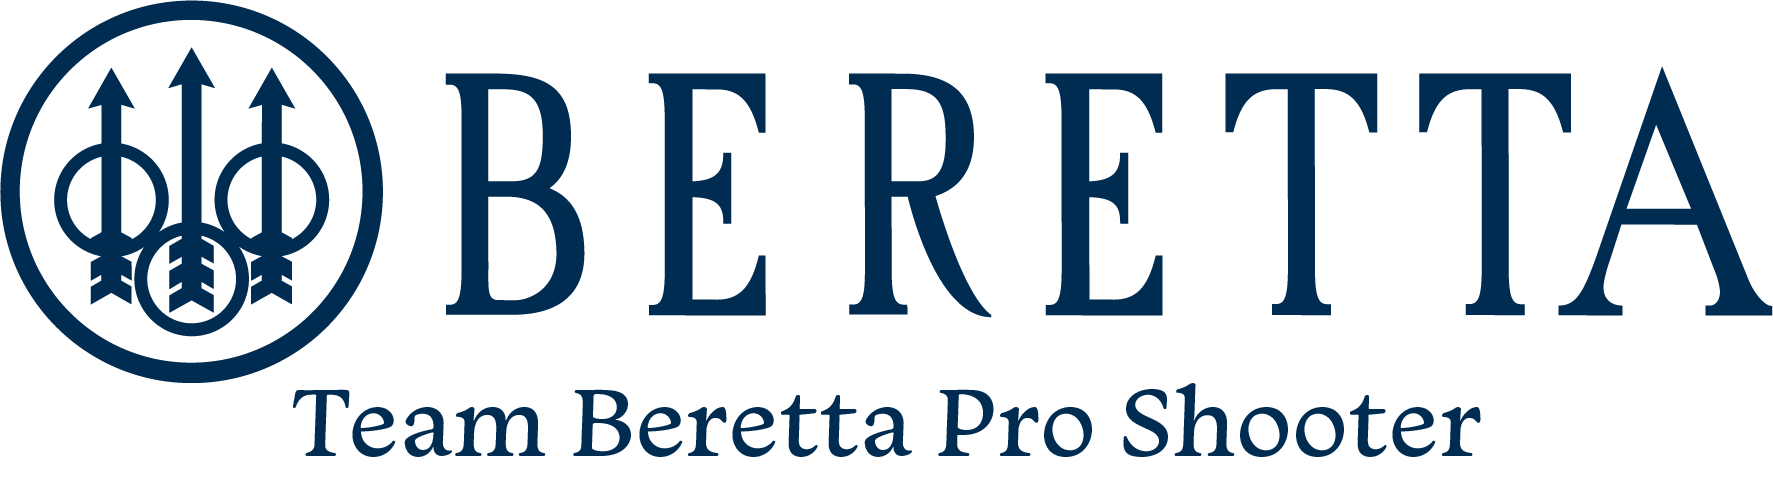 Beretta Pro Shooter Website